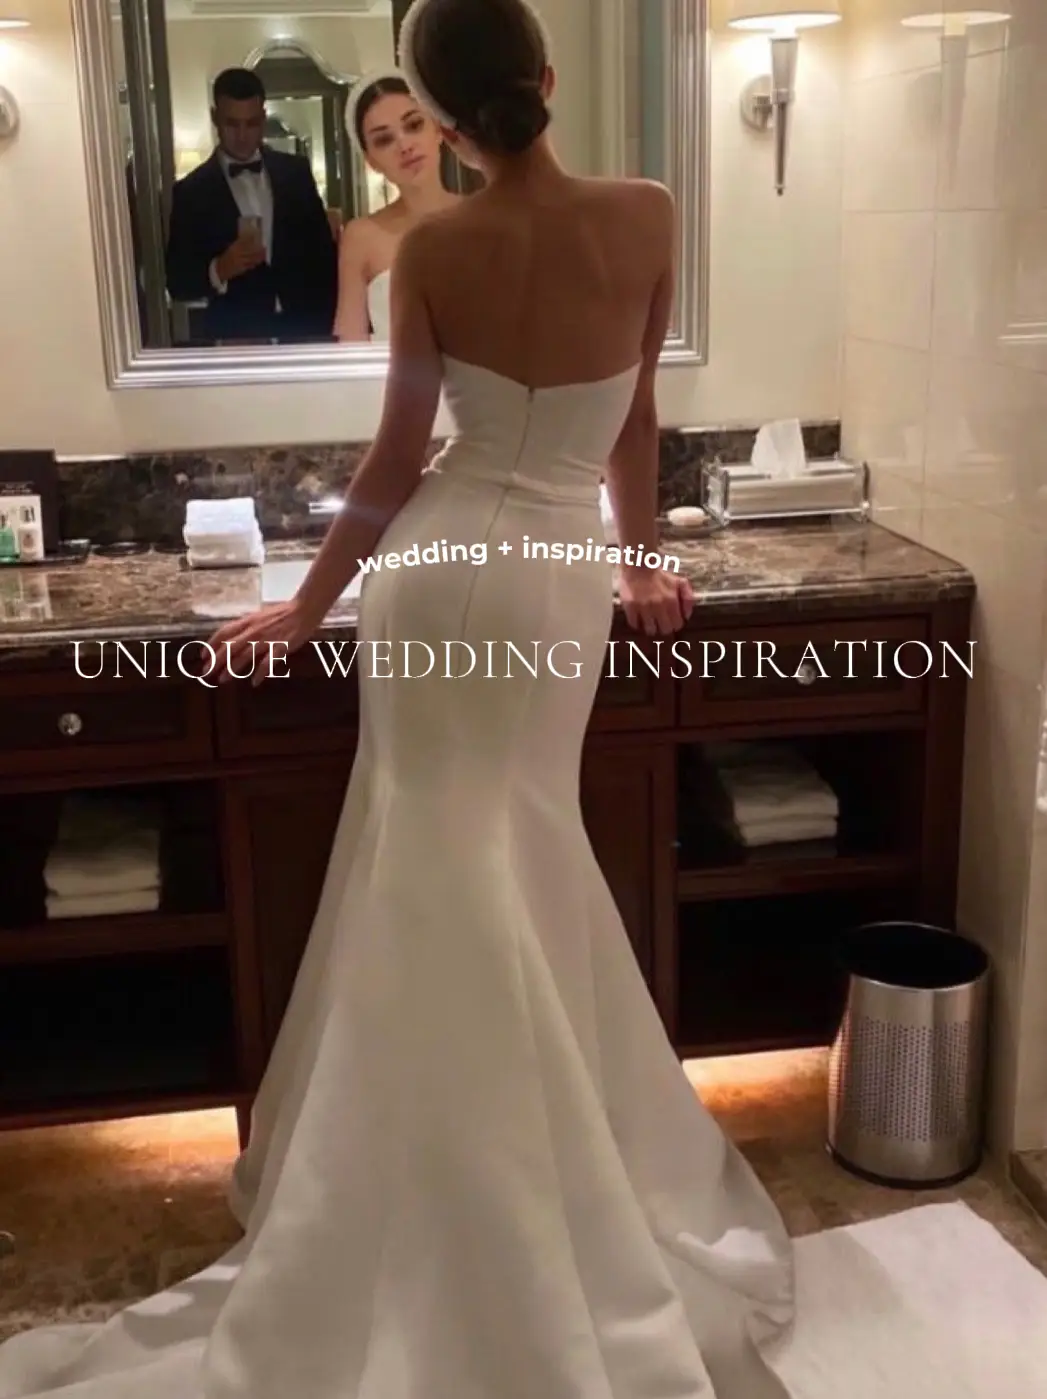 canyon rose, dusty rose wedding color inspiration with bridesmaid dresses  2019 #wedding #weddinginsp…